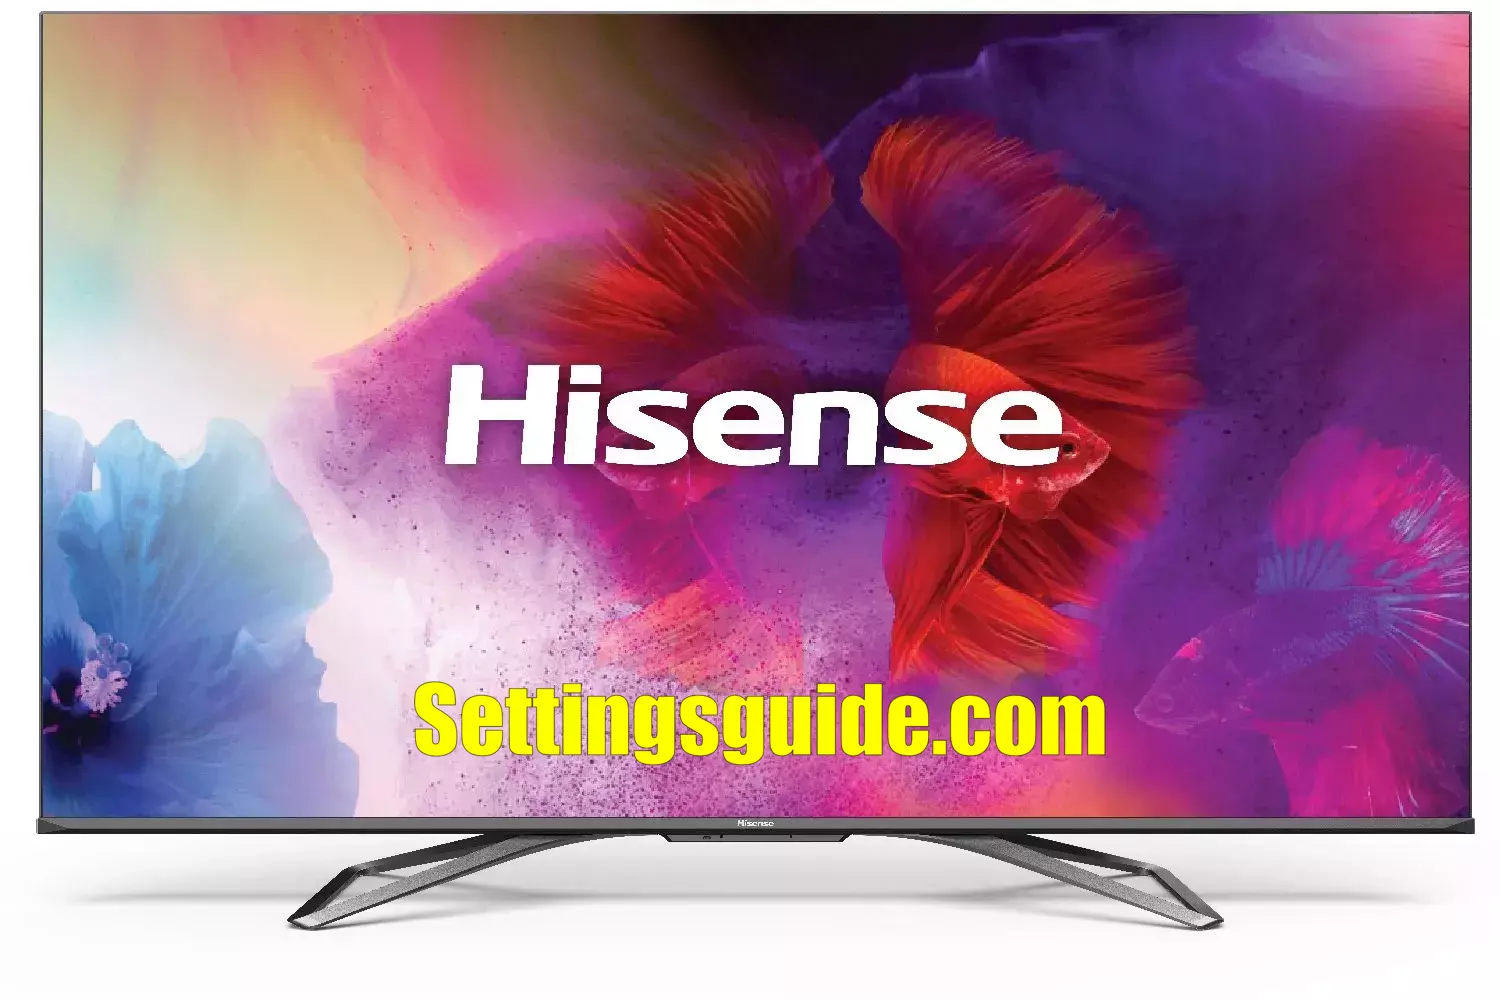 Hisense TV Reset Button